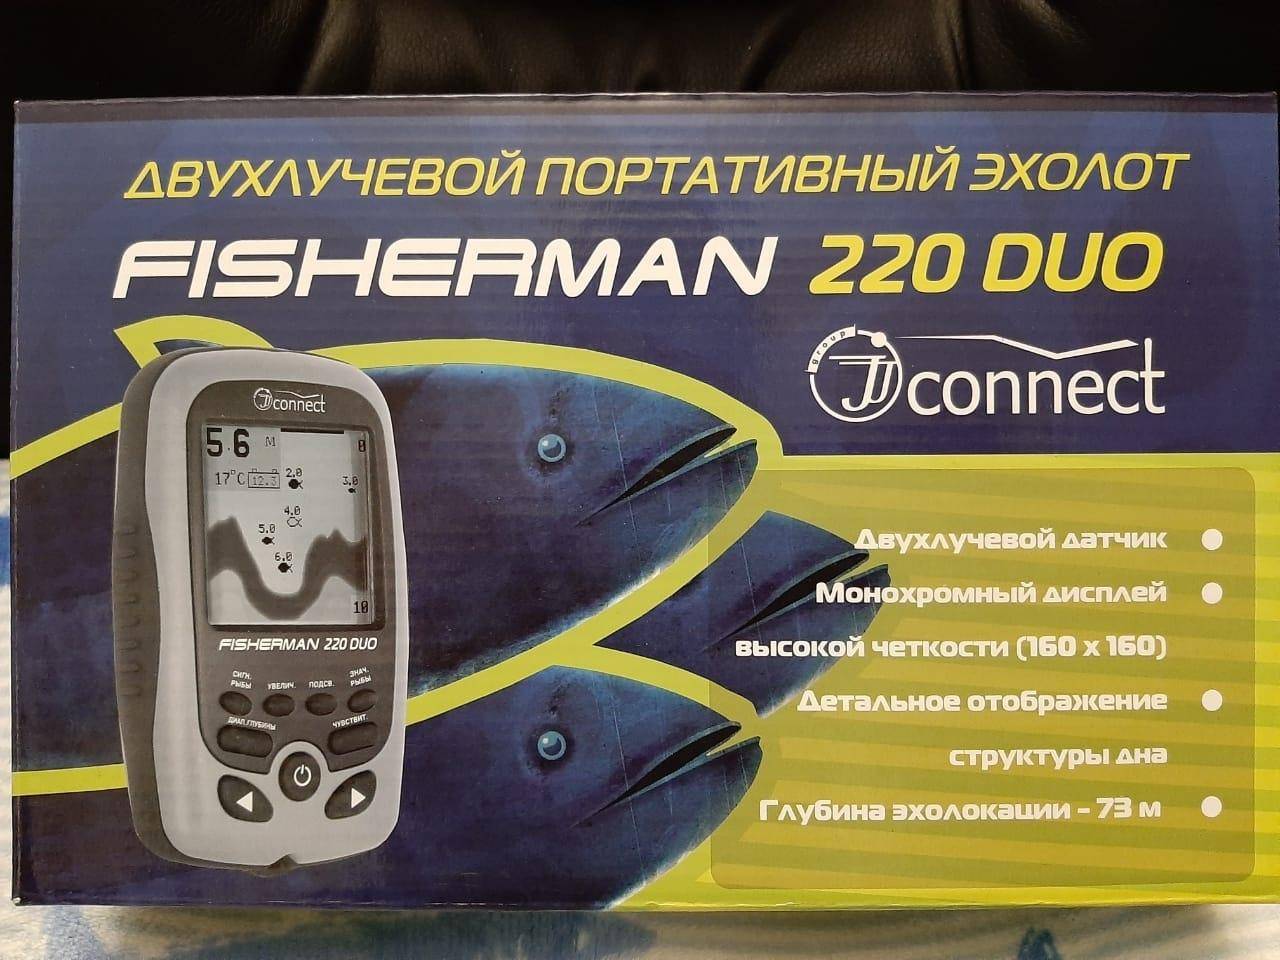 Jj-connect fisherman 500 duo: инструкция и руководство на русском